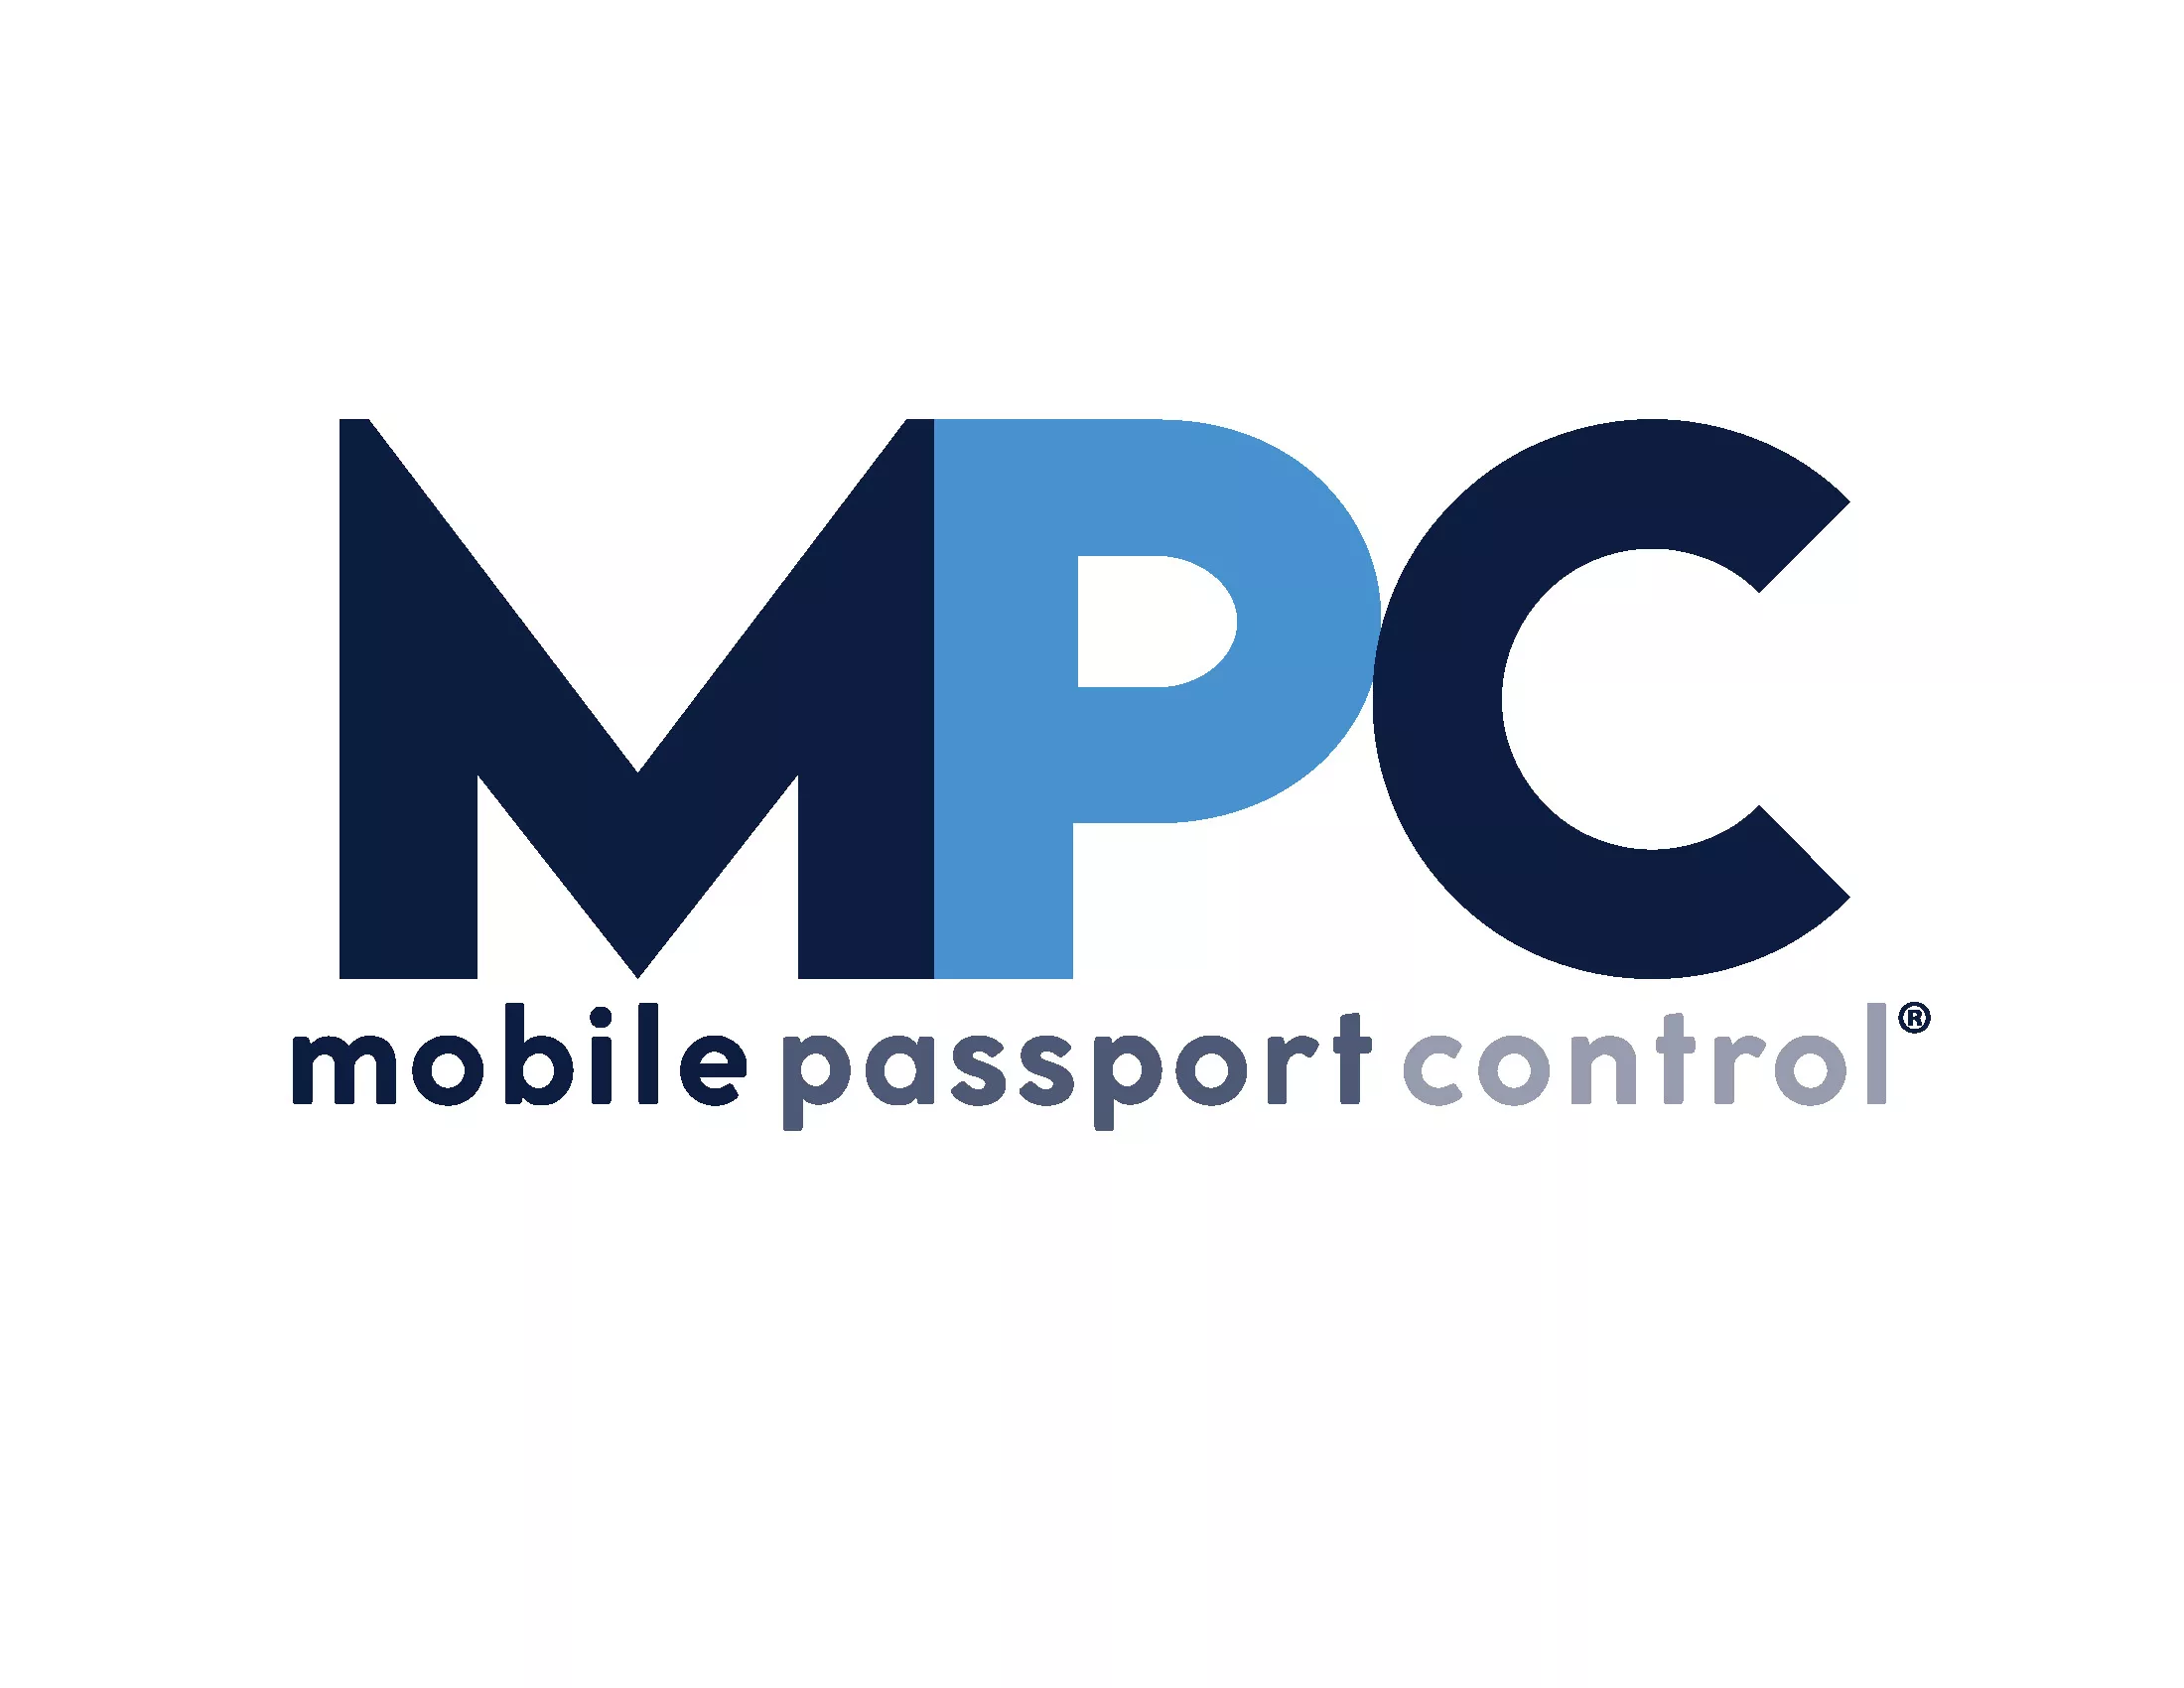 Mobile Passport Control